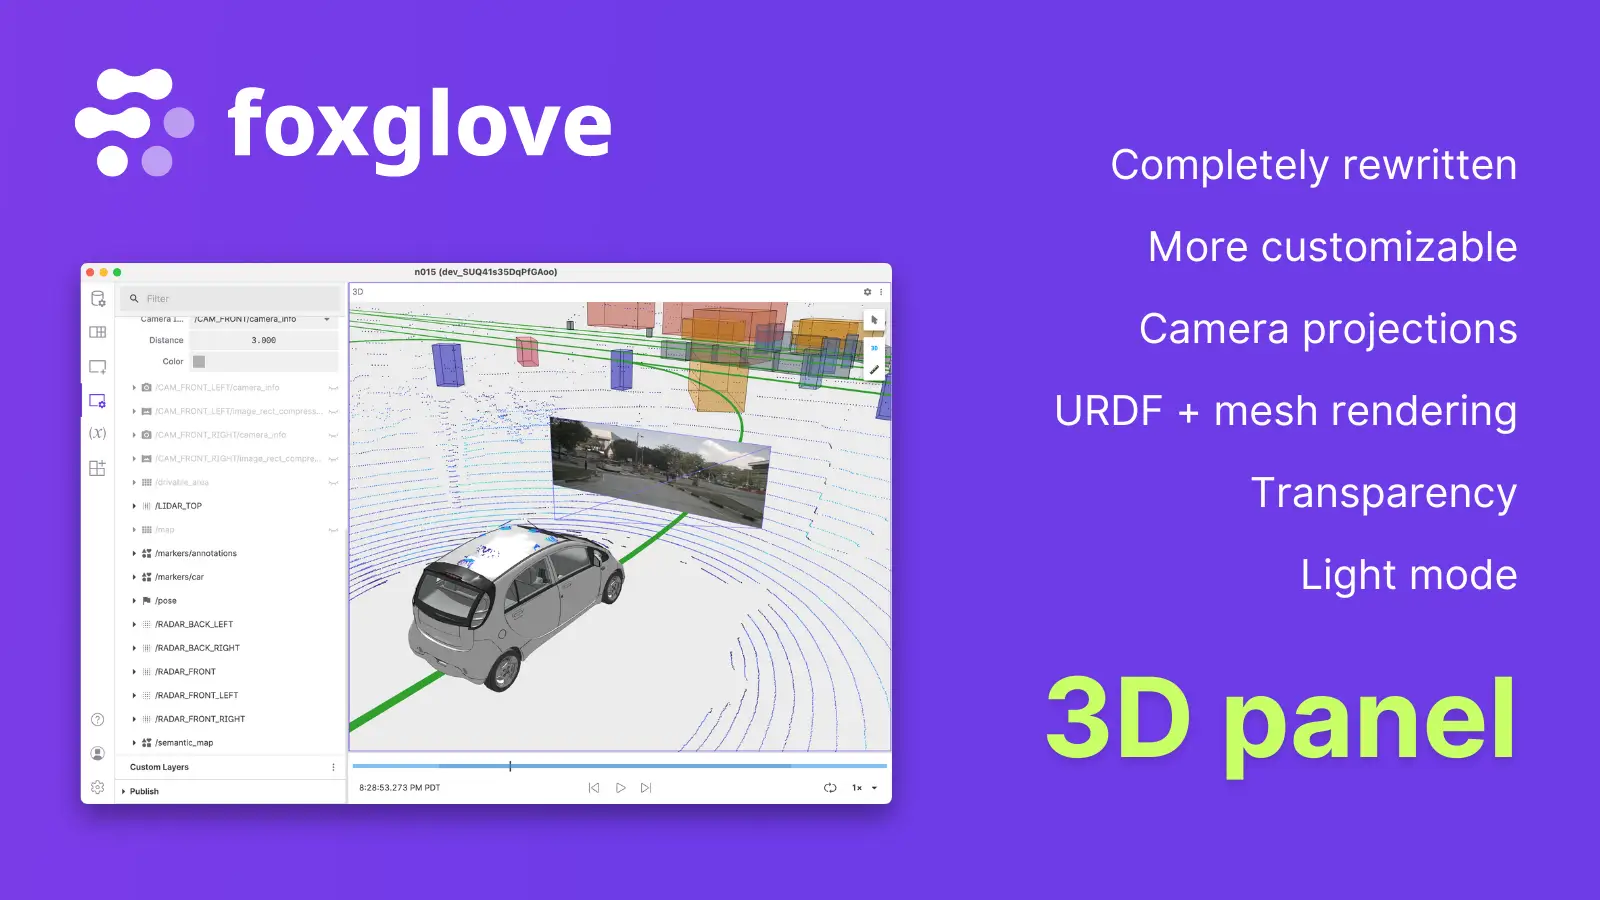 Announcing Foxglove Studio's New 3D Panel